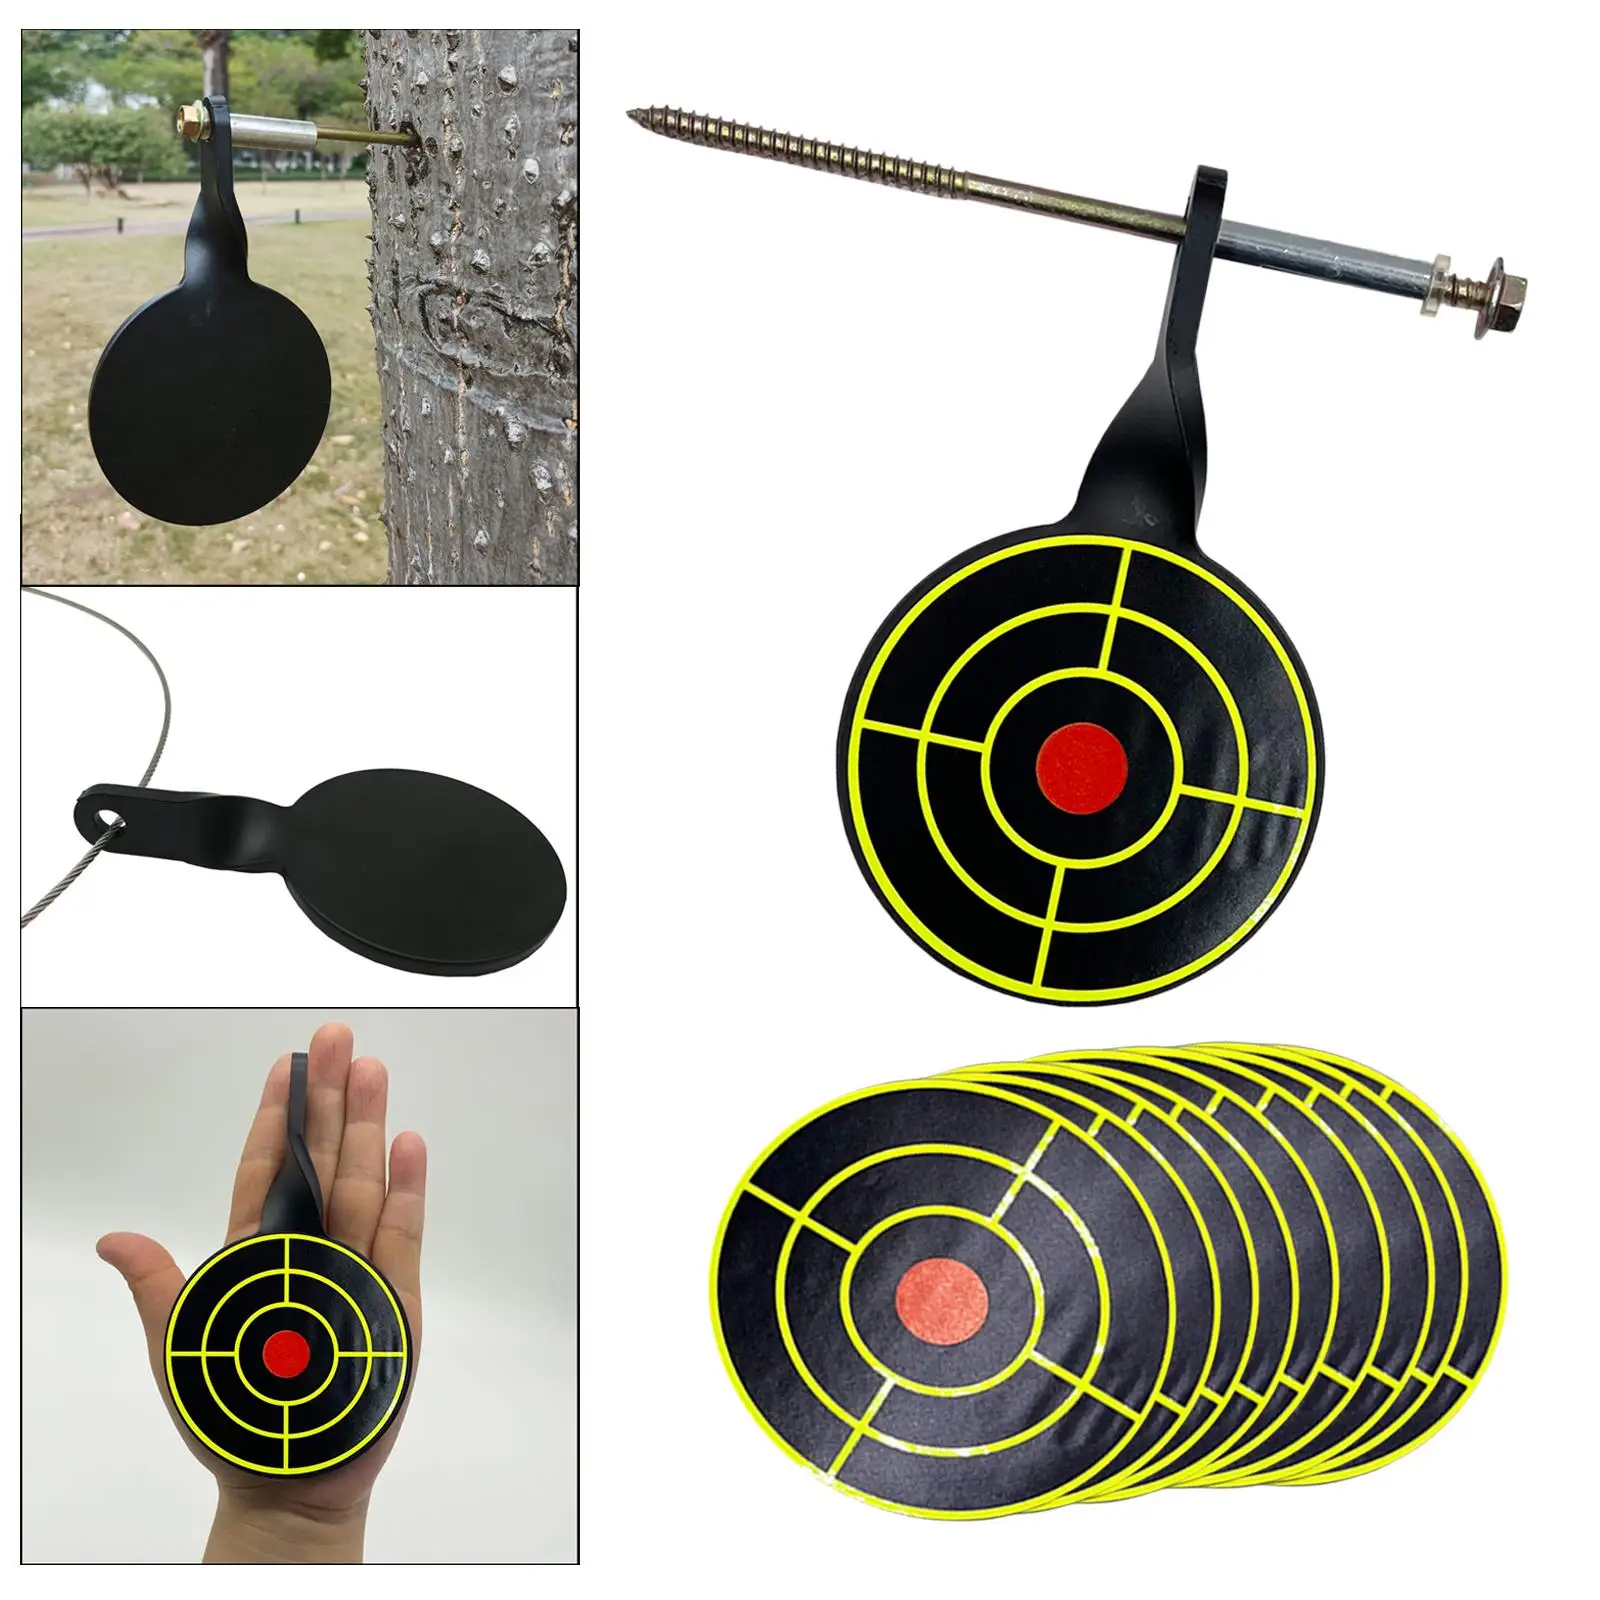 Steel Practice Target Reset Target 5mm Tree Standing Target Rotary Screwed Type for Range Outdoor Sports Toy Hunting Games